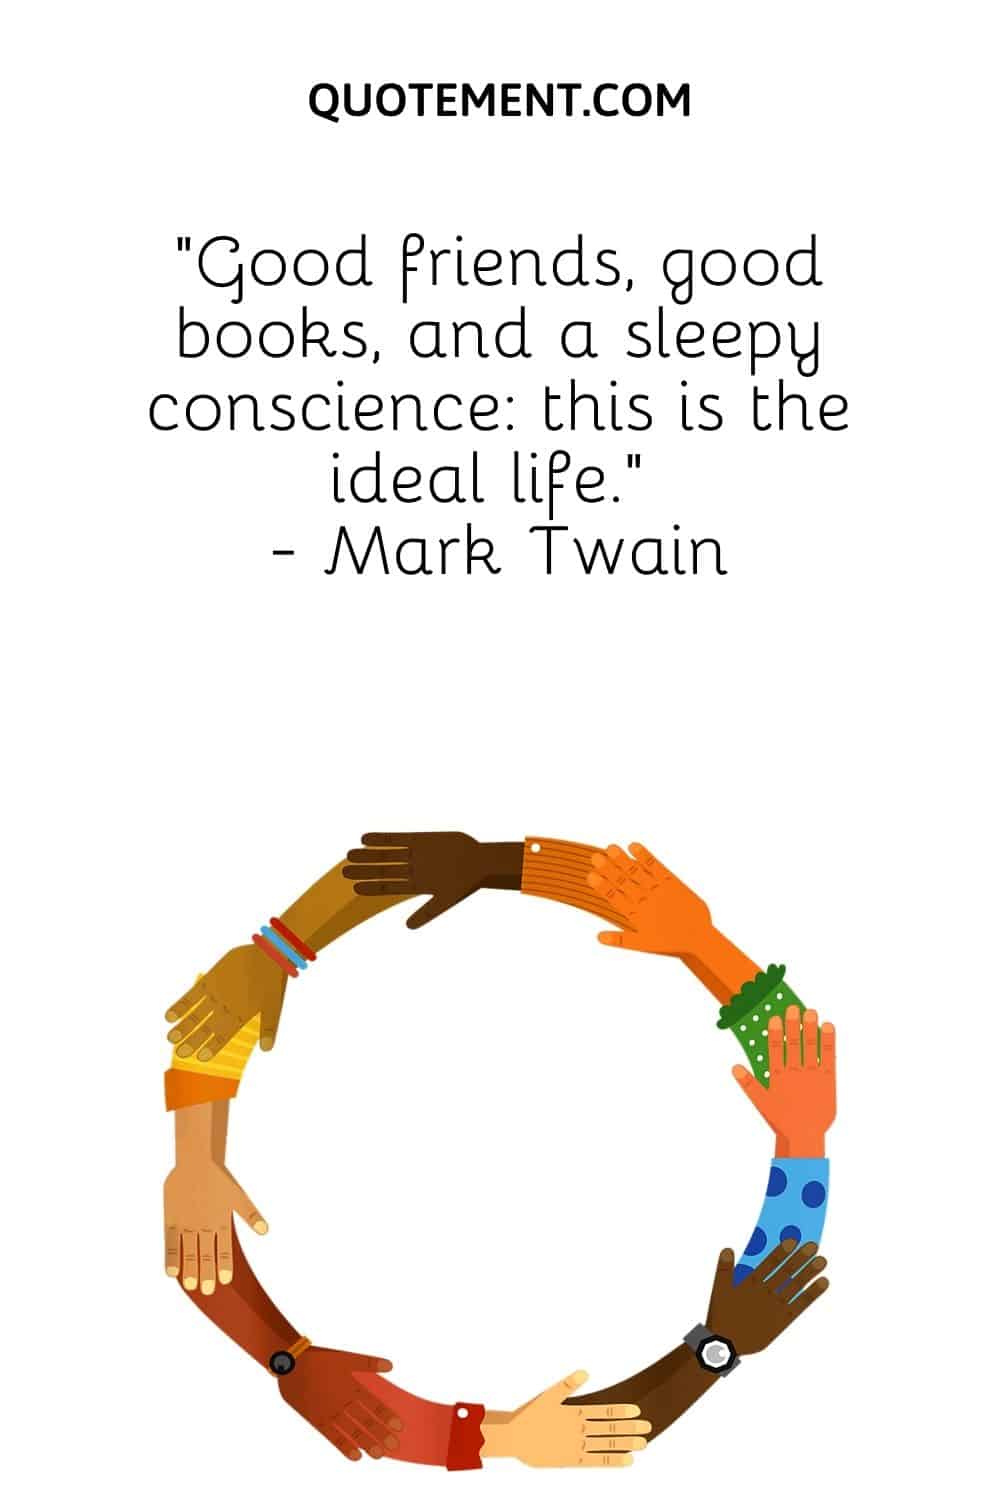 “Good friends, good books, and a sleepy conscience this is the ideal life.” - Mark Twain